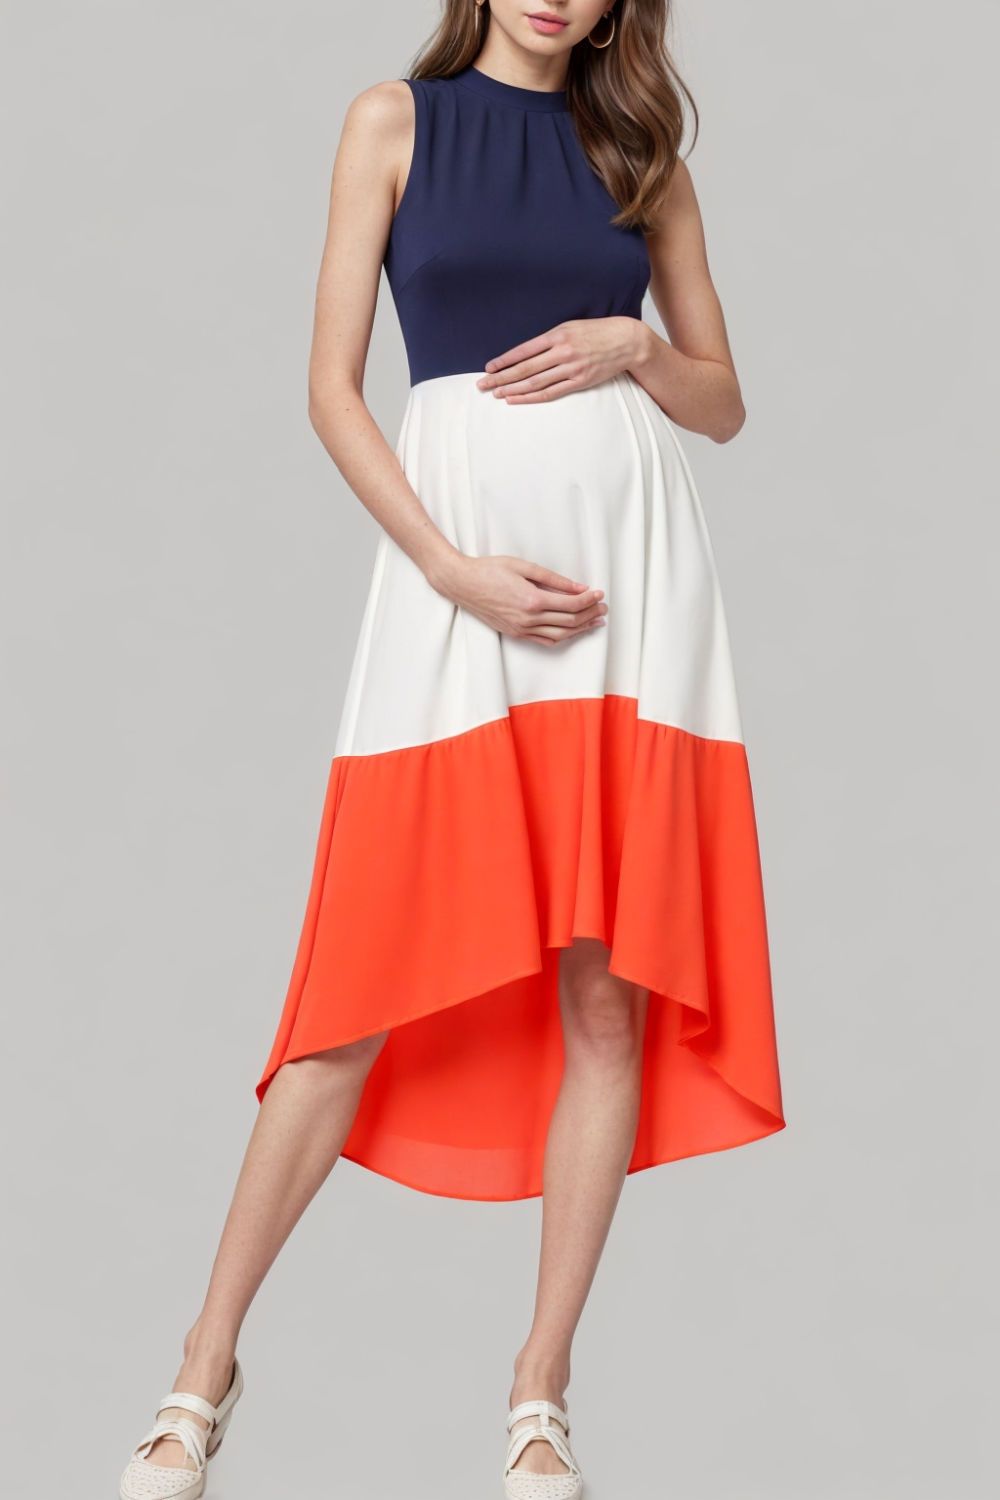 elegance and comfort color blocked midi dress